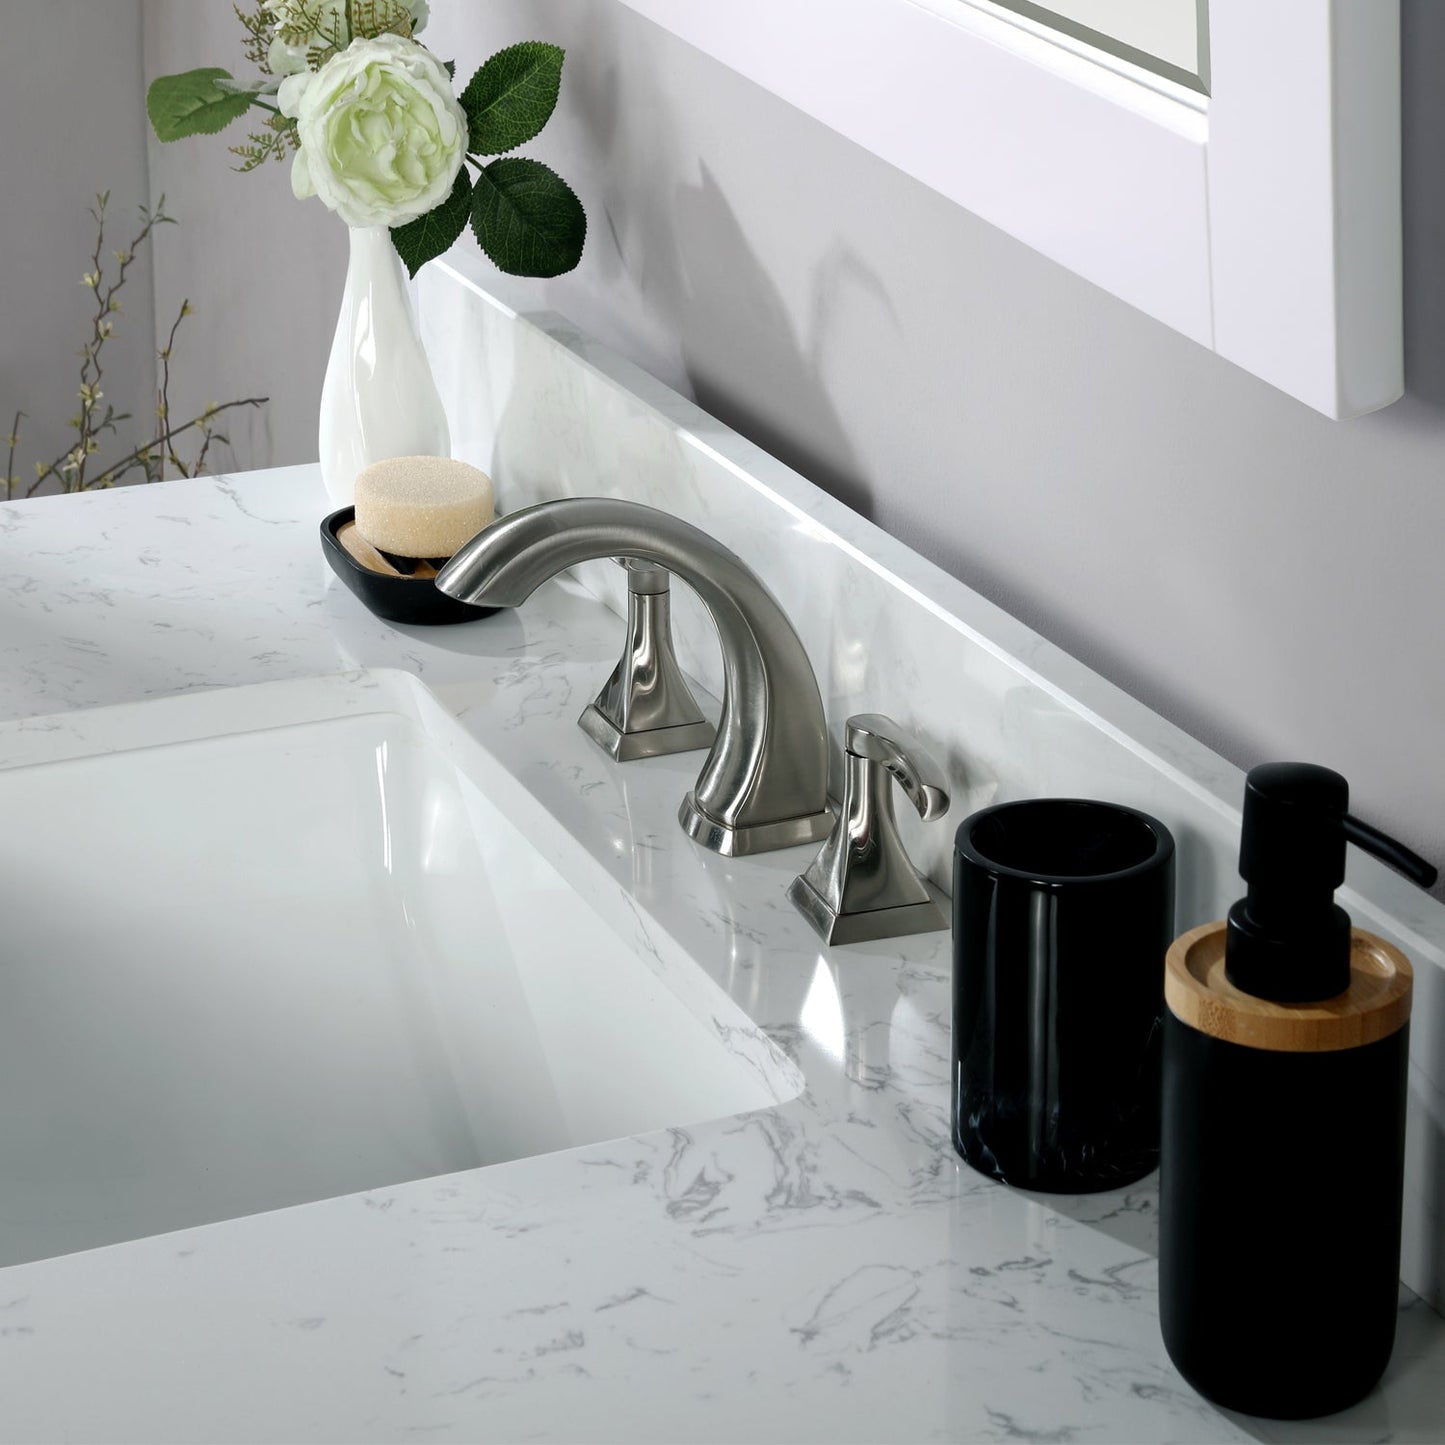 Isla 42" Single Bathroom Vanity Set in White and Aosta White Composite Stone Countertop with Mirror